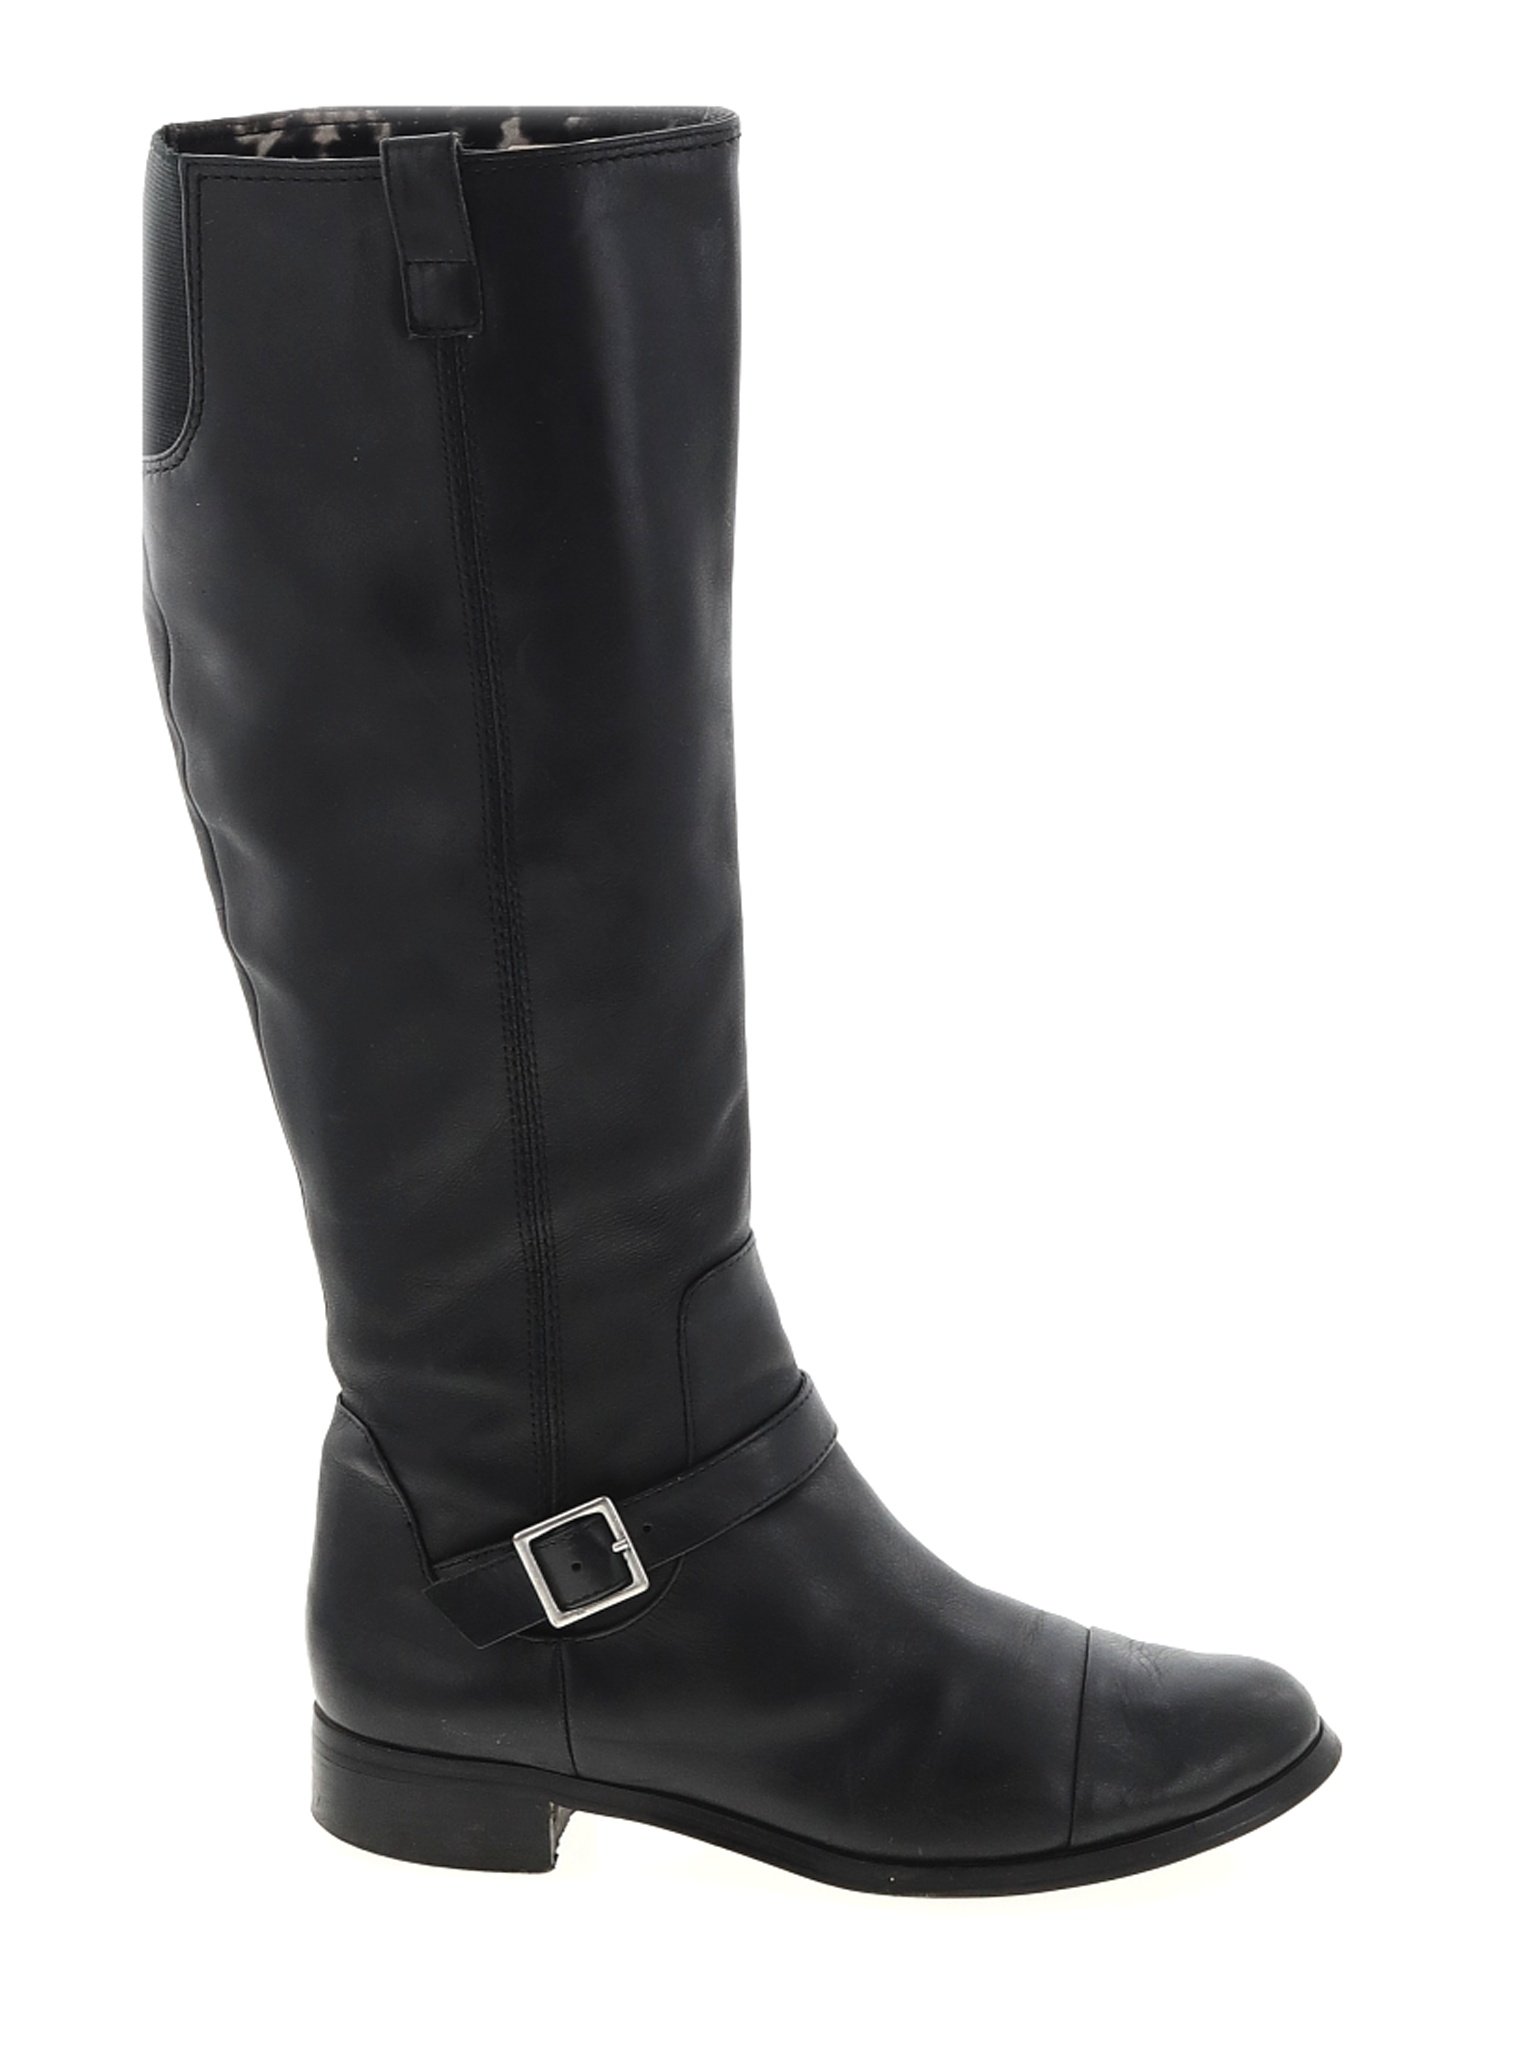 RACHEL Rachel Roy Women Black Boots US 6.5 | eBay